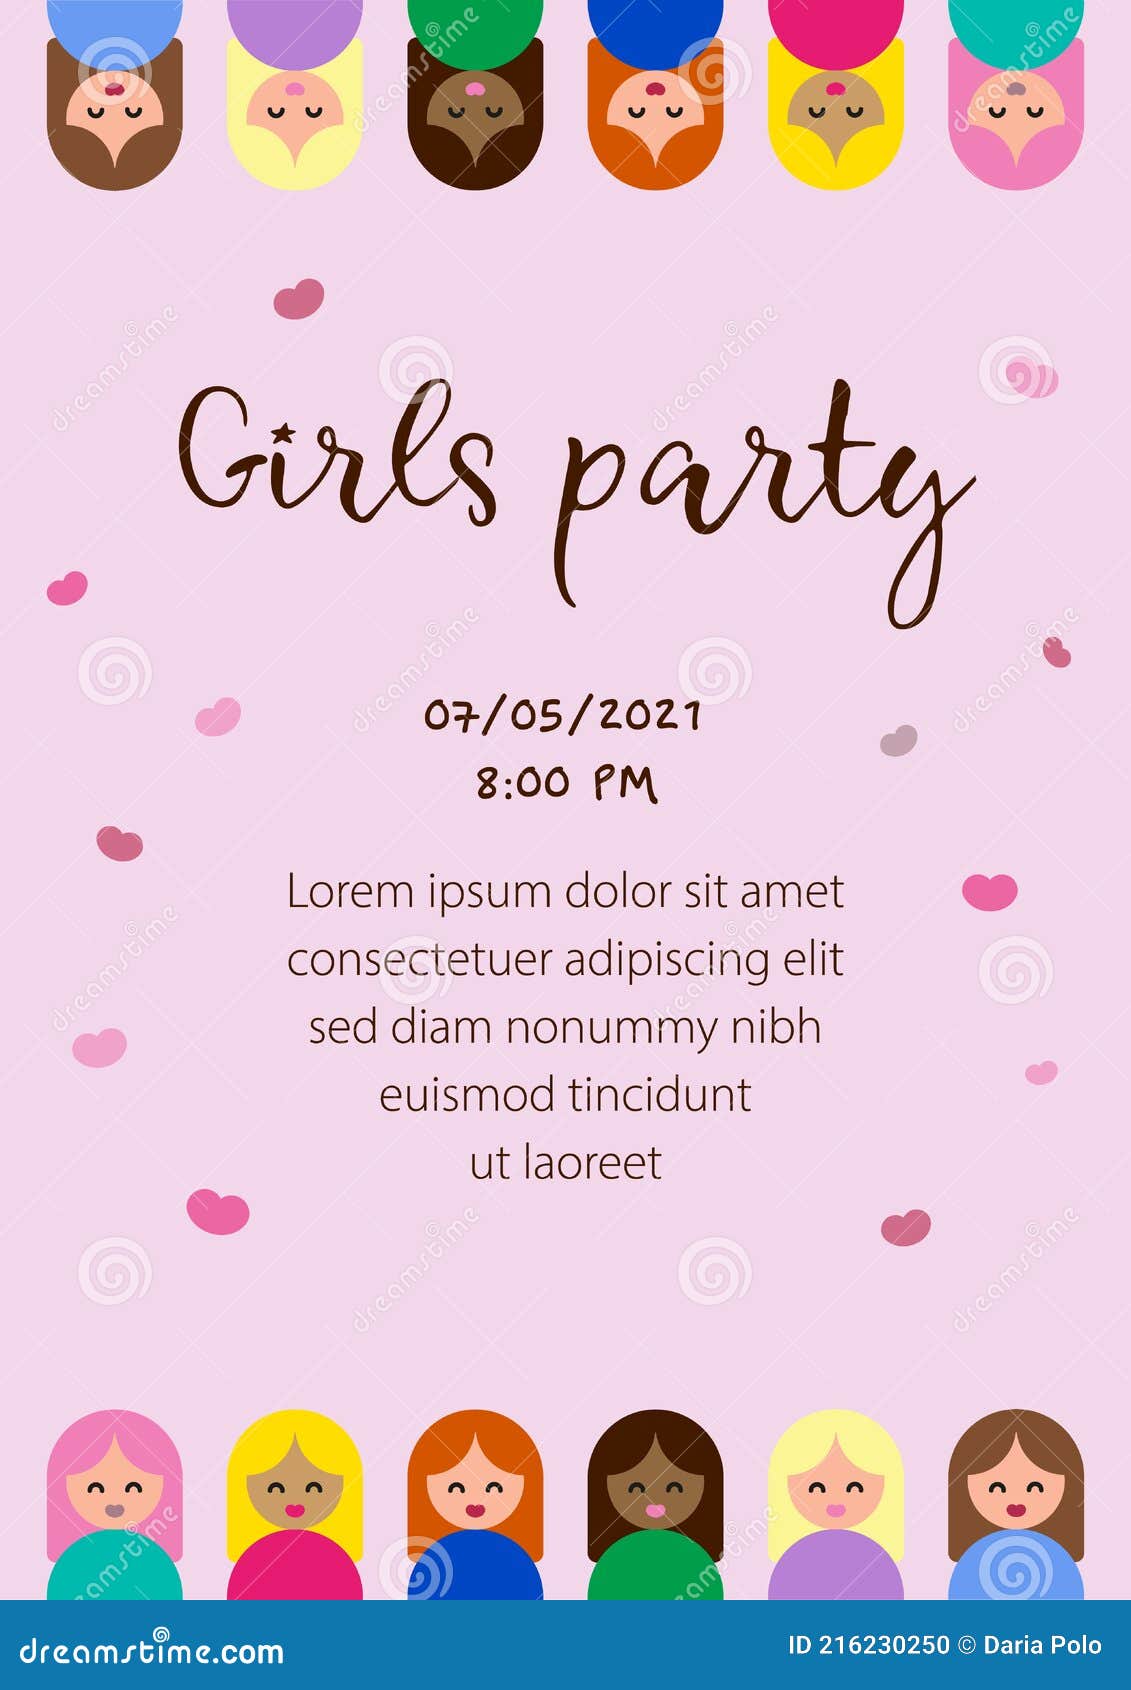 Convite festa SPA para meninas